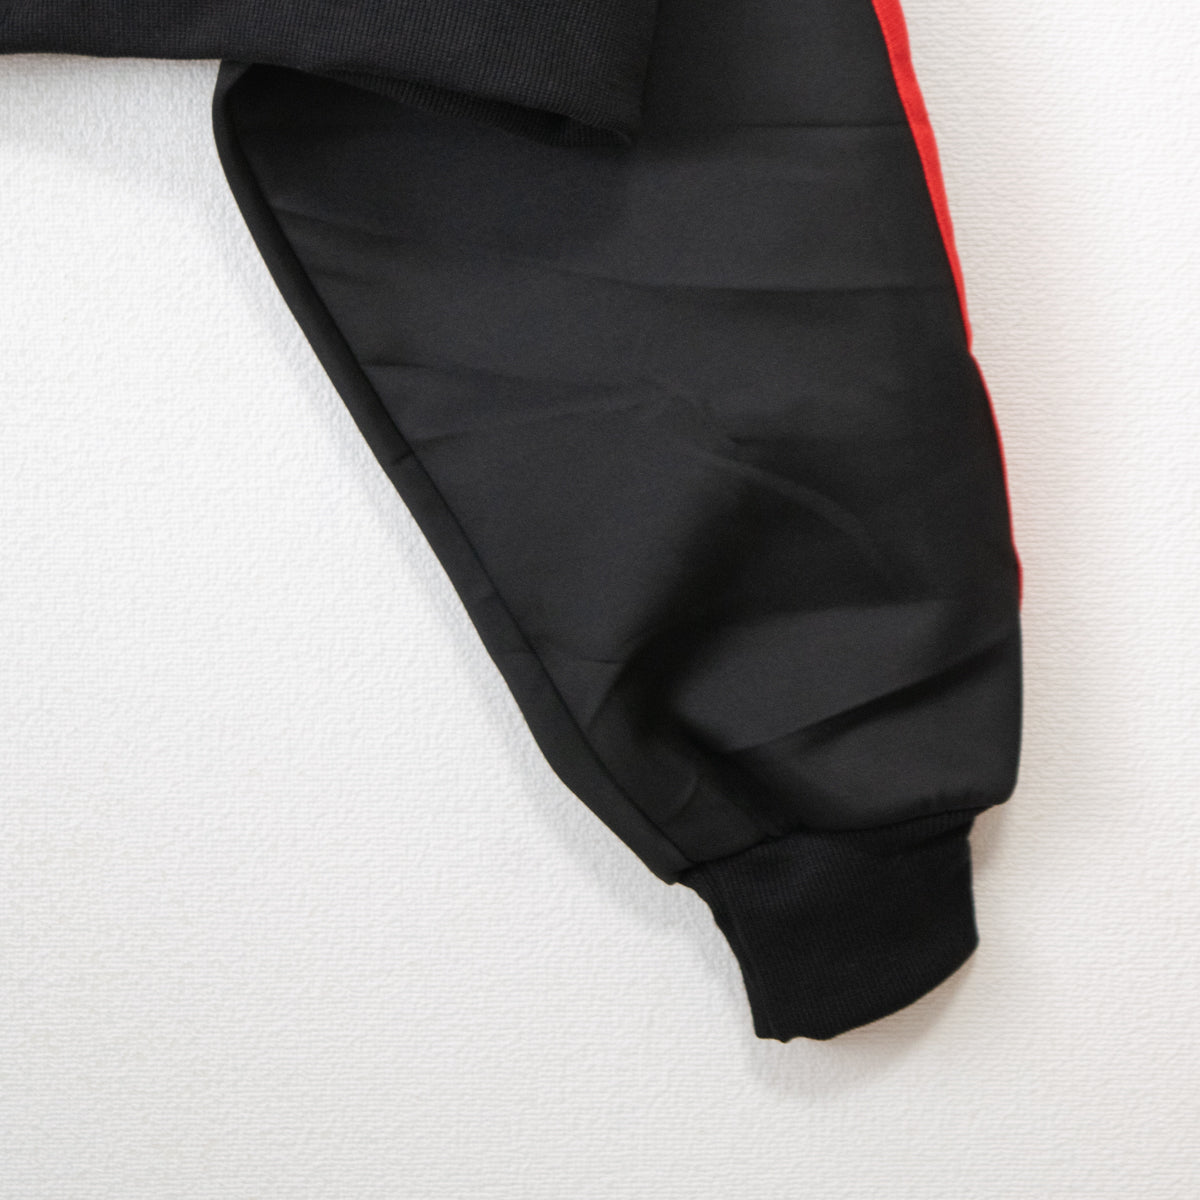 ACDC Rag Wing Heart Side Line short jersey jacket Black - YOUAREMYPOISON